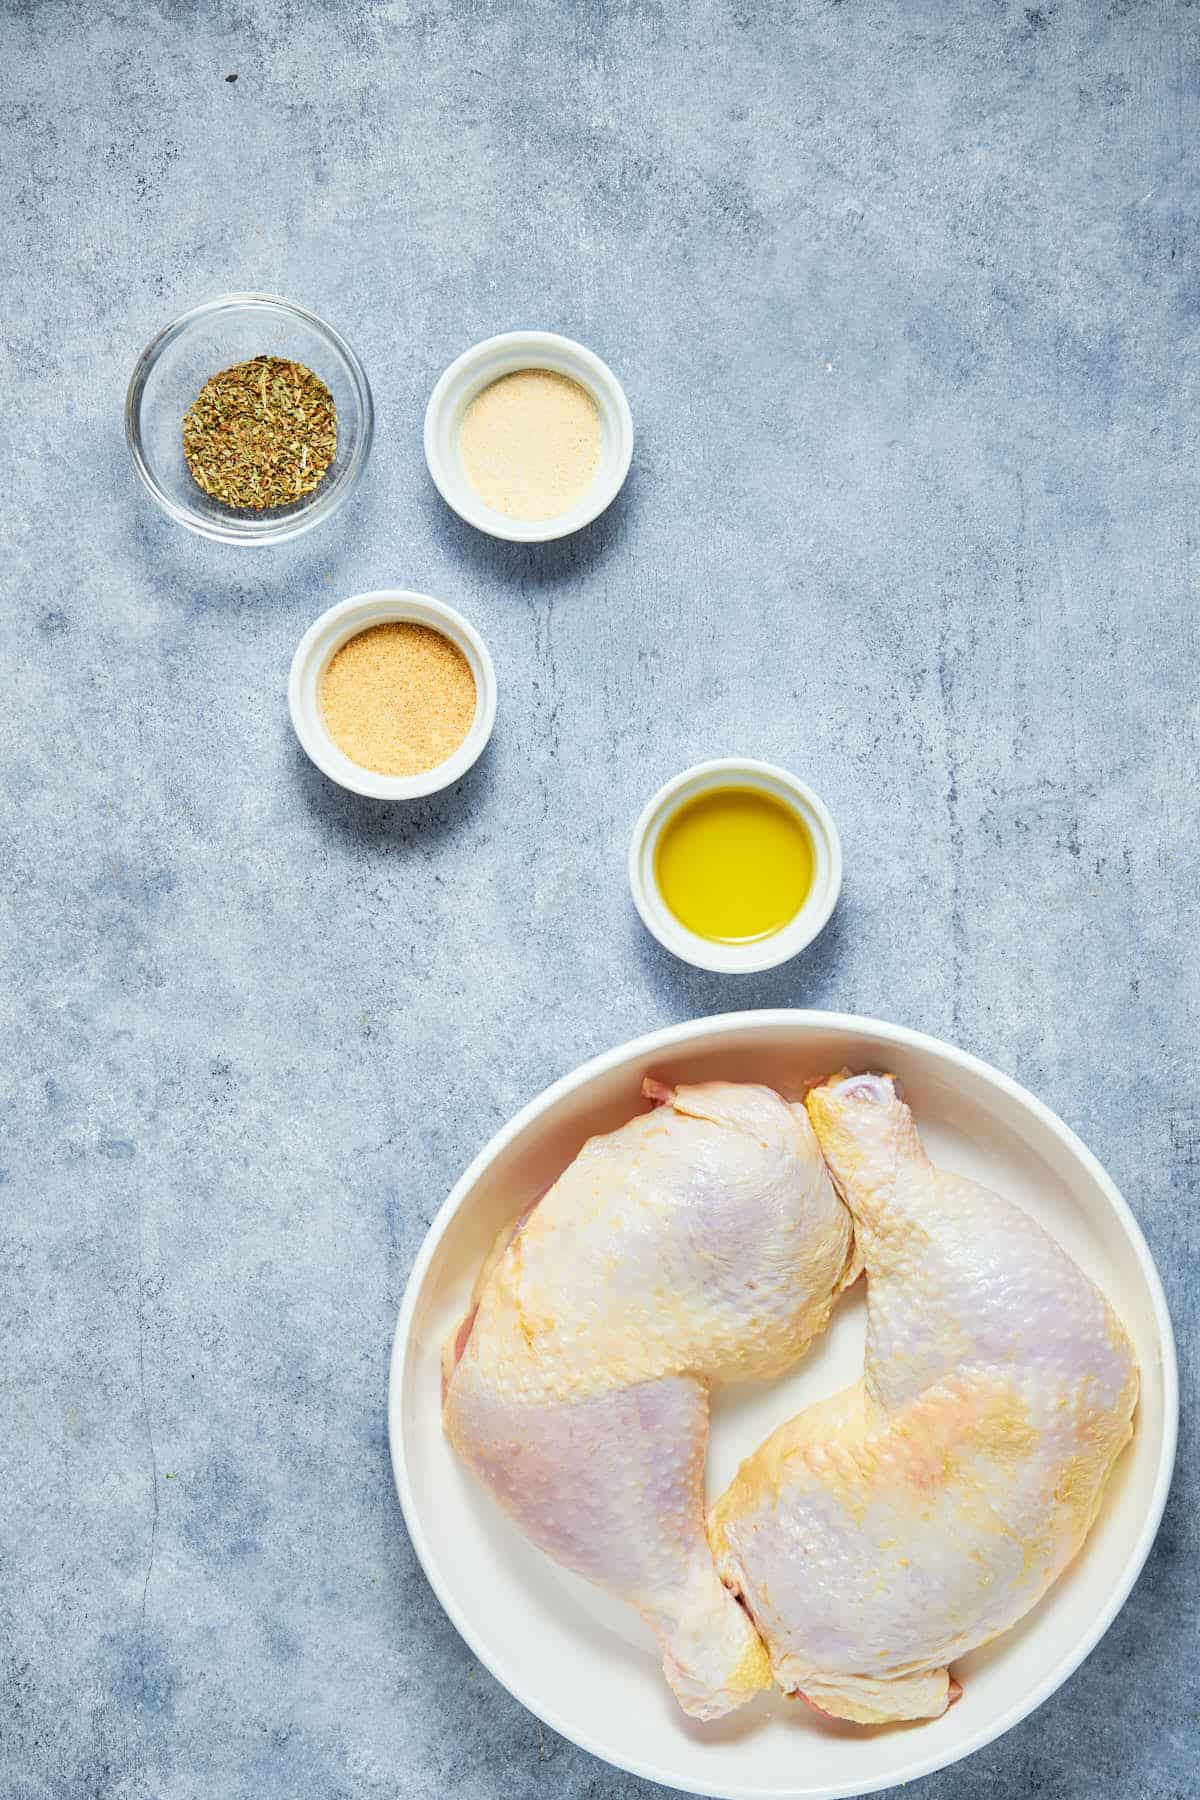 Ingredients to make chicken legs quarter ready to start cooking.